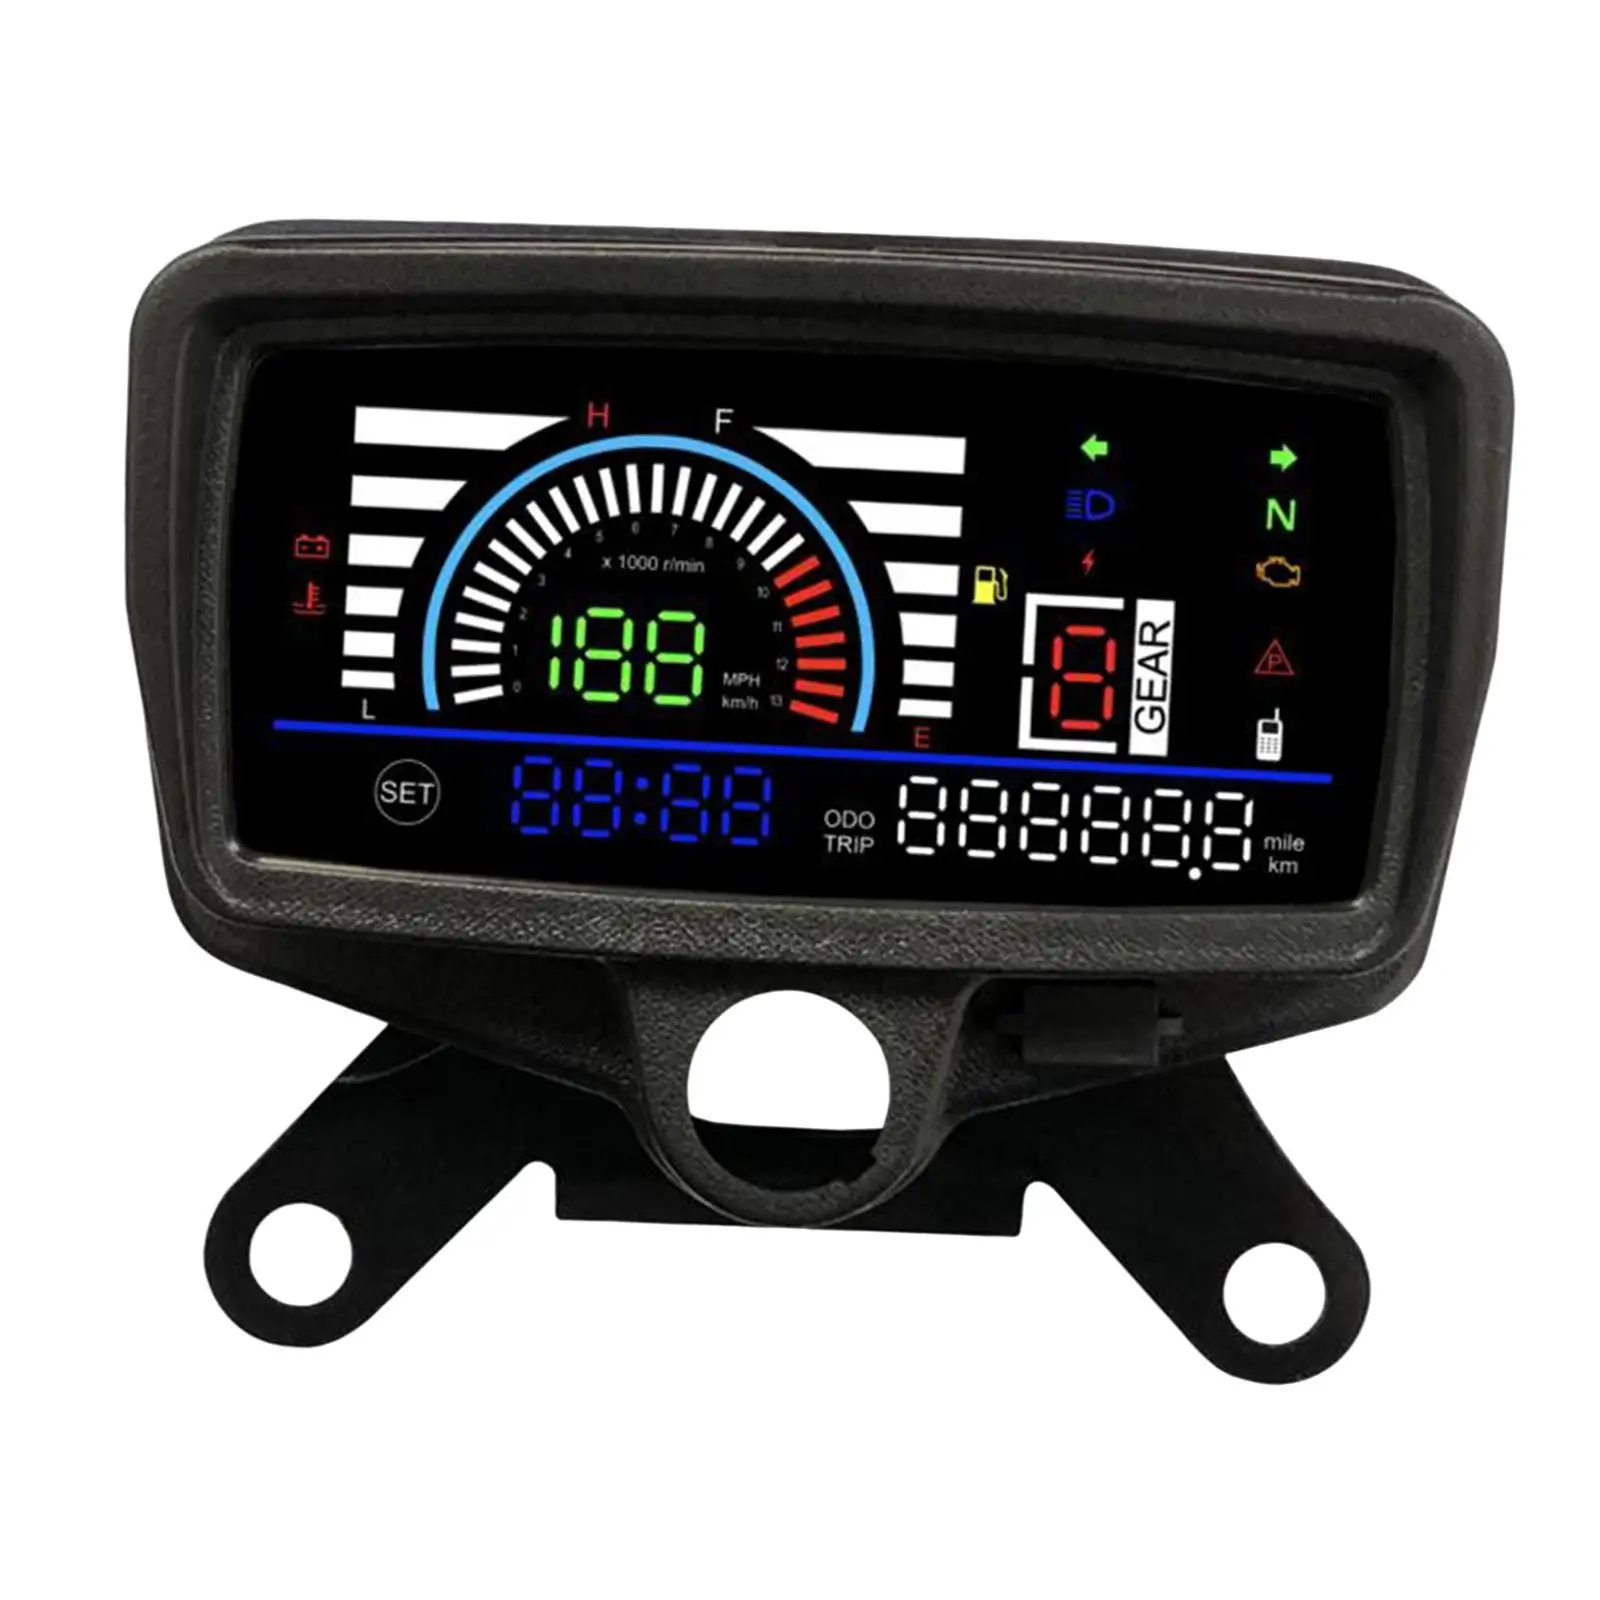 Motorbike LCD Digital Speedometer Turn Signal Display for CG125-Cg150